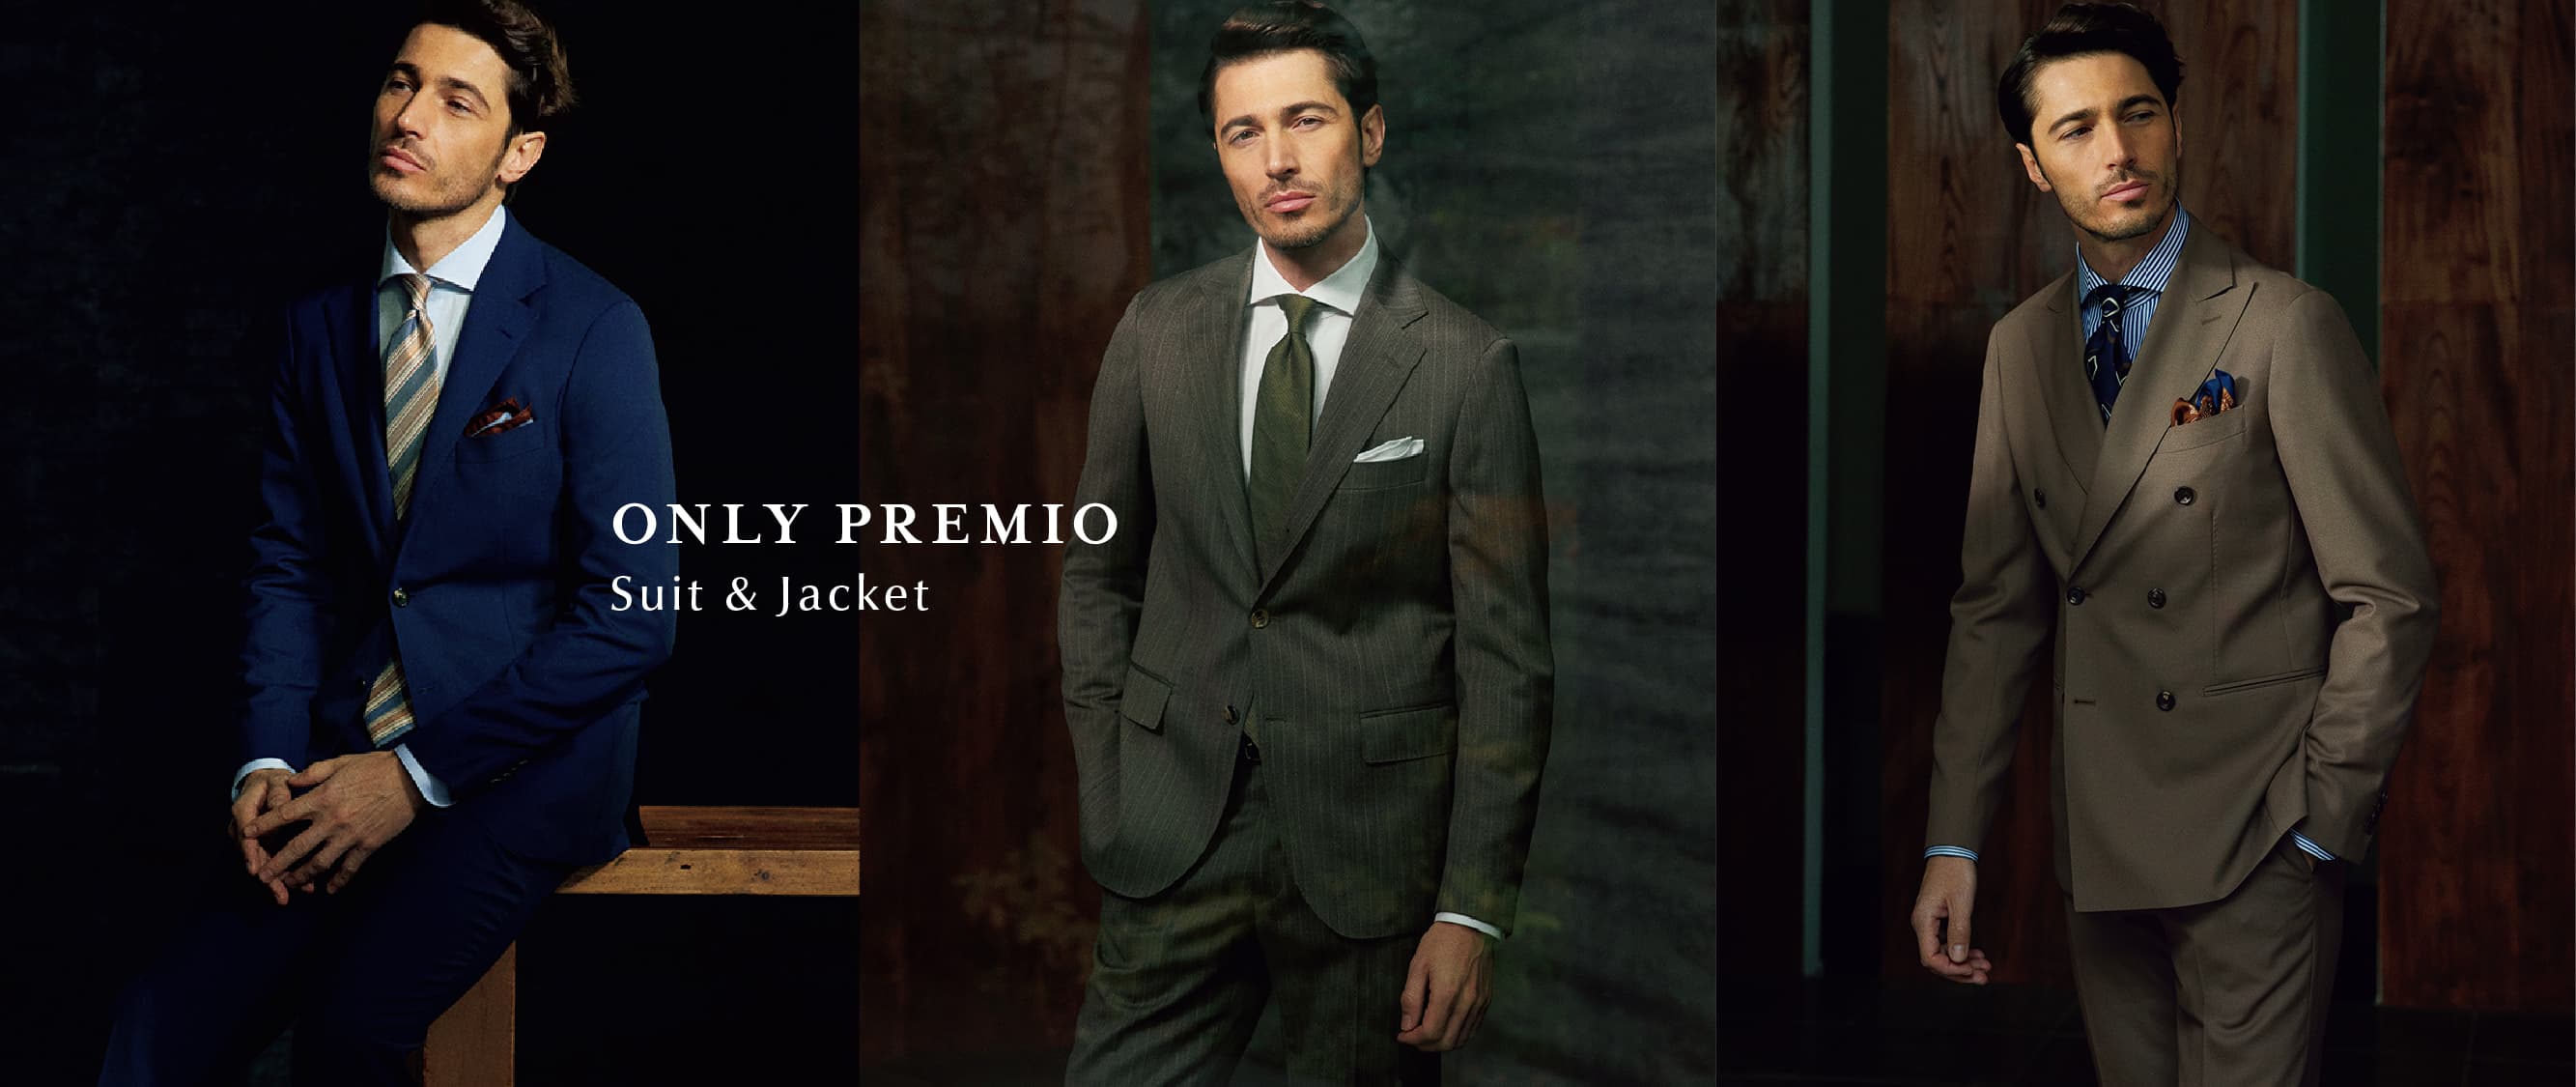 ONLY PREMIO Suit & Jacket